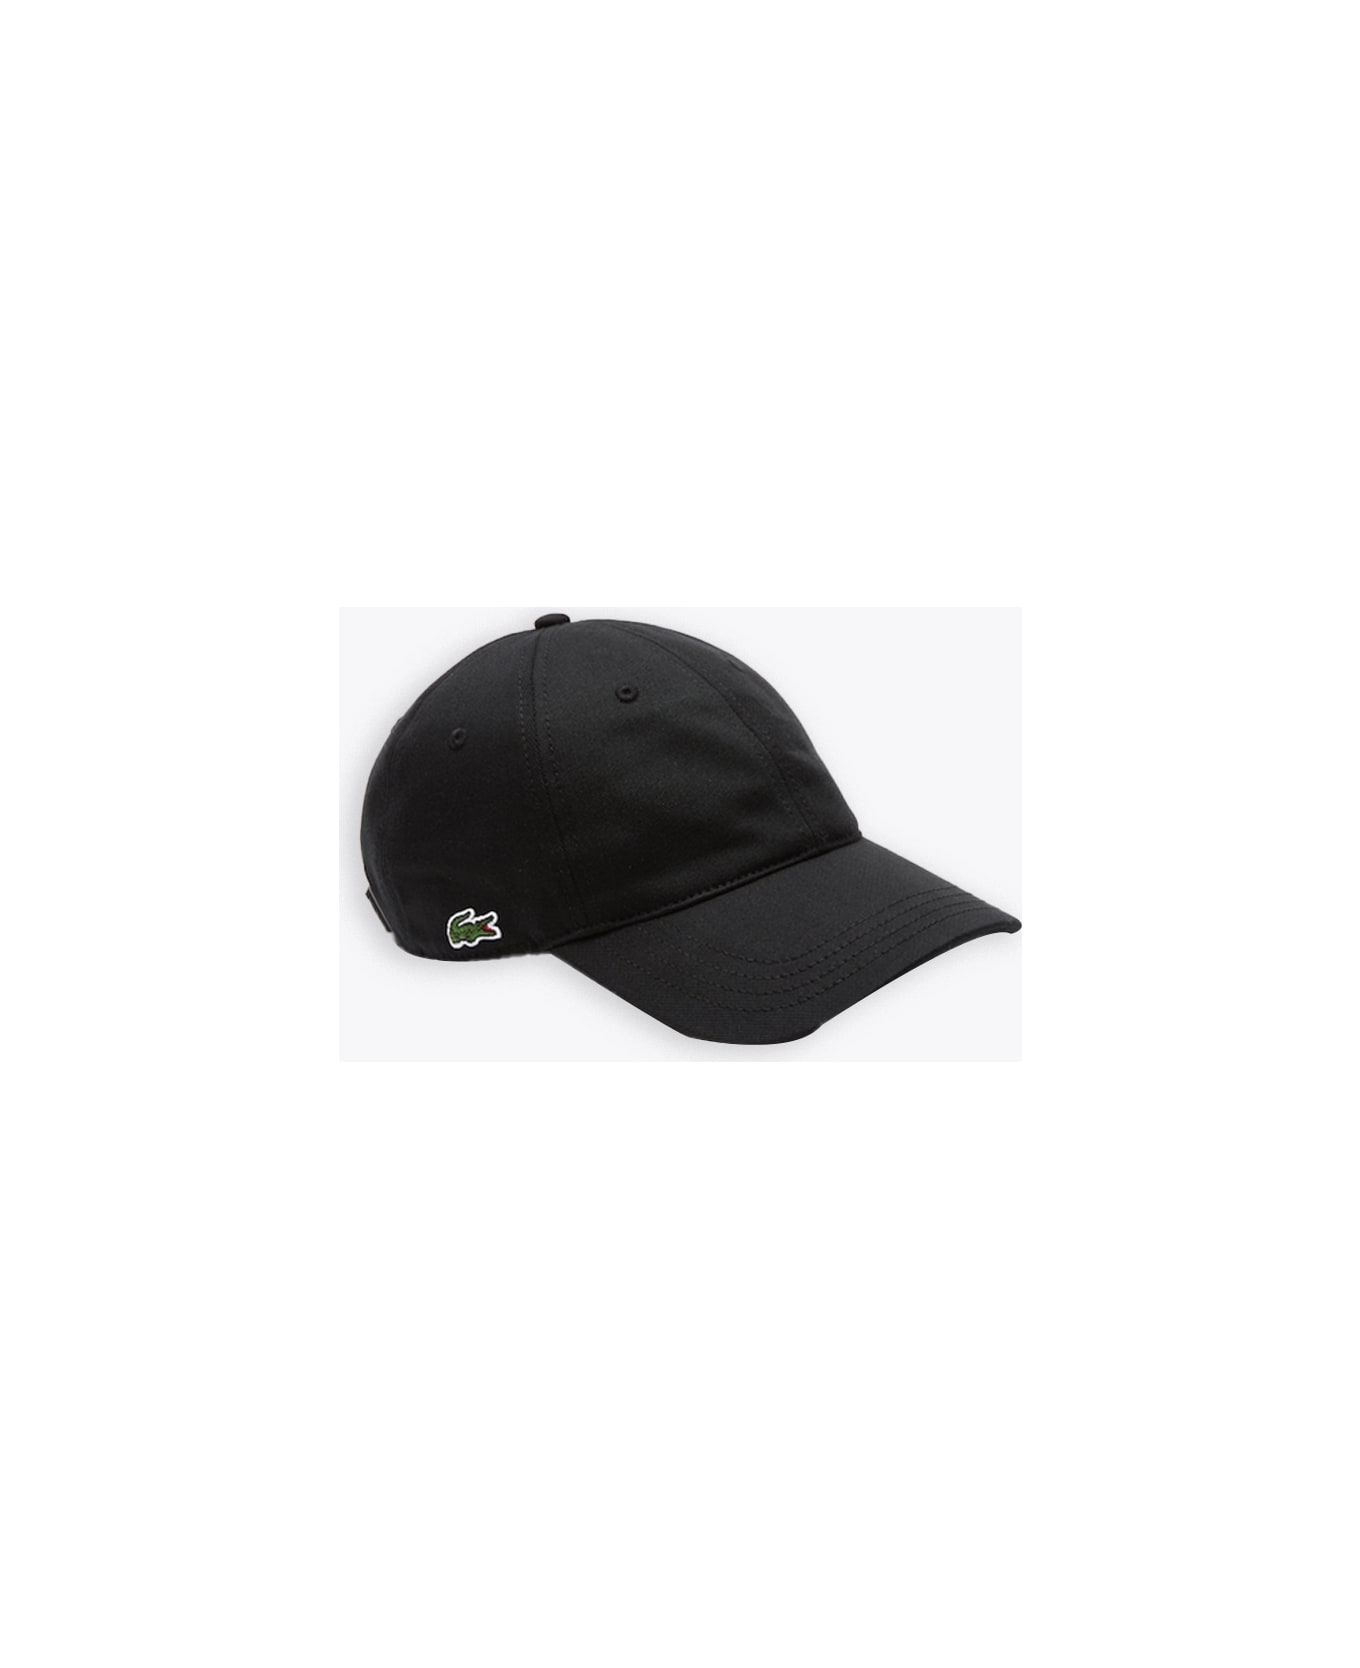 Lacoste Cappellino Black cotton cap with side logo patch - Nero